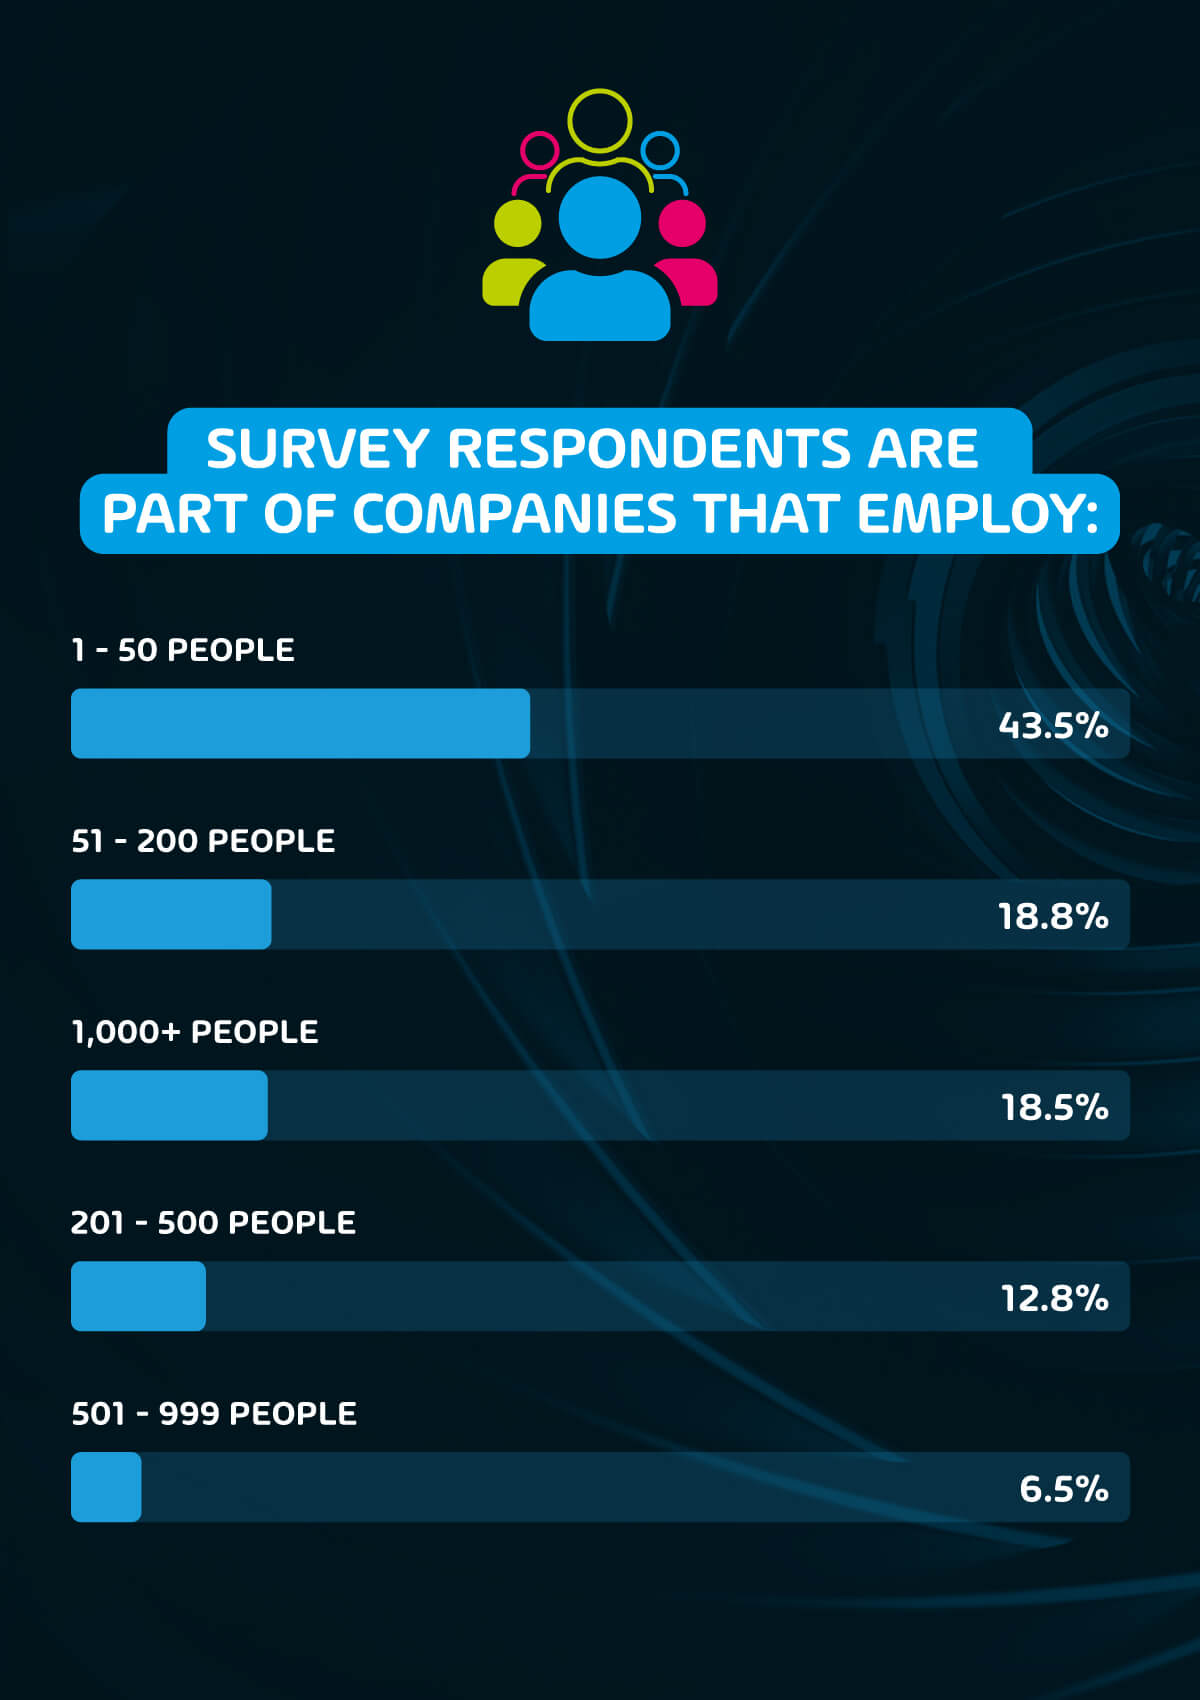 Surveyed Companies Employees